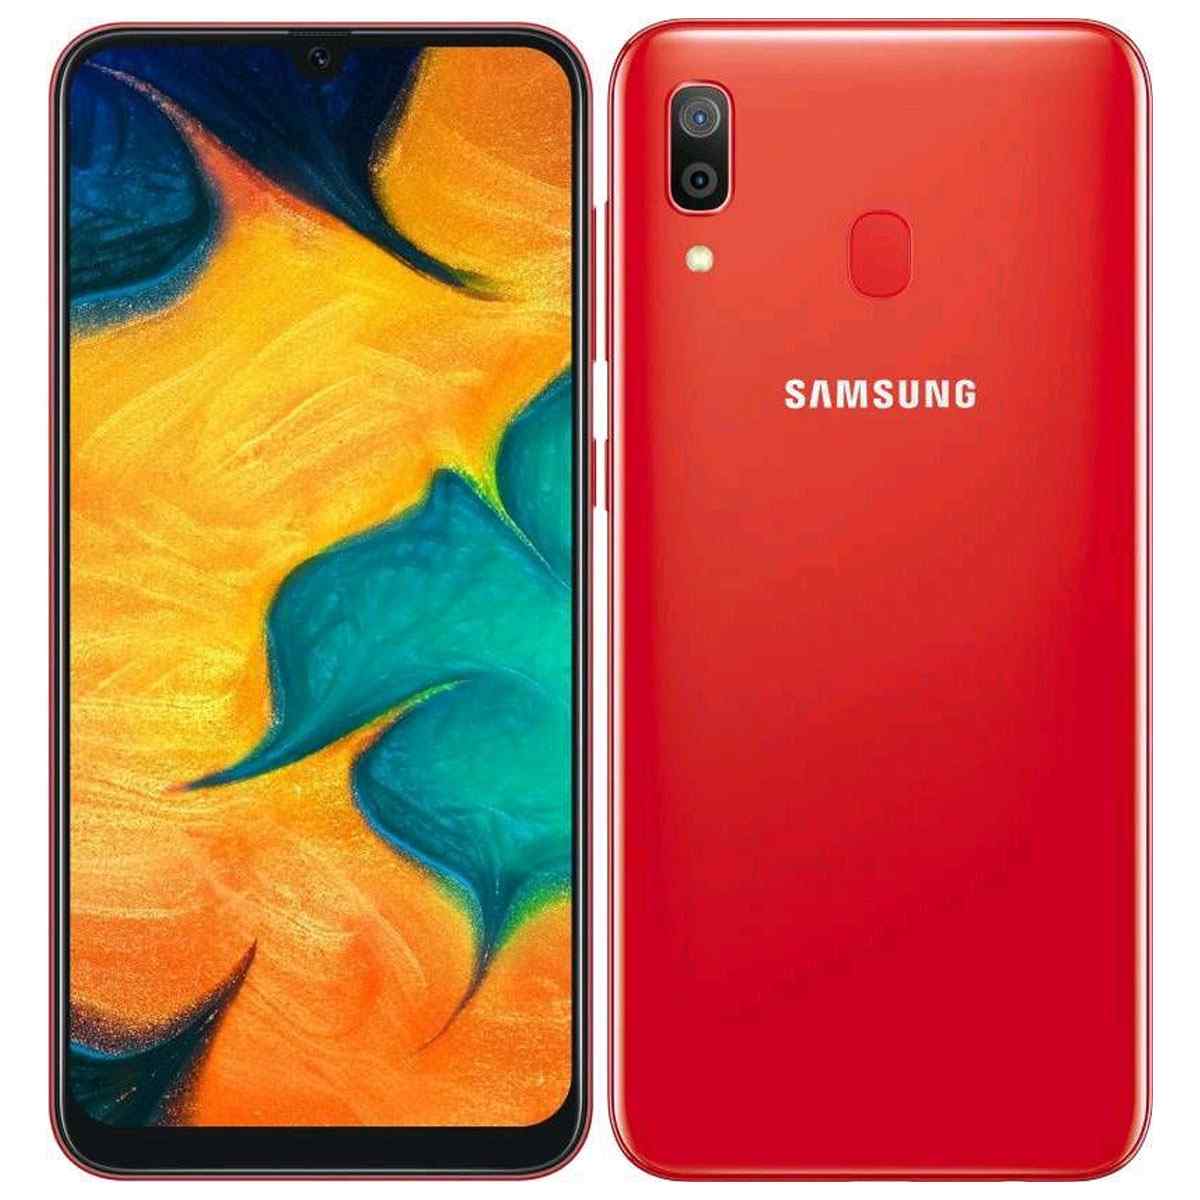 Самсунг а55 отзывы владельцев. Samsung Galaxy a30. Samsung Galaxy a30 Red. Samsung Galaxy a30 2019. Самсунг галакси а 30.